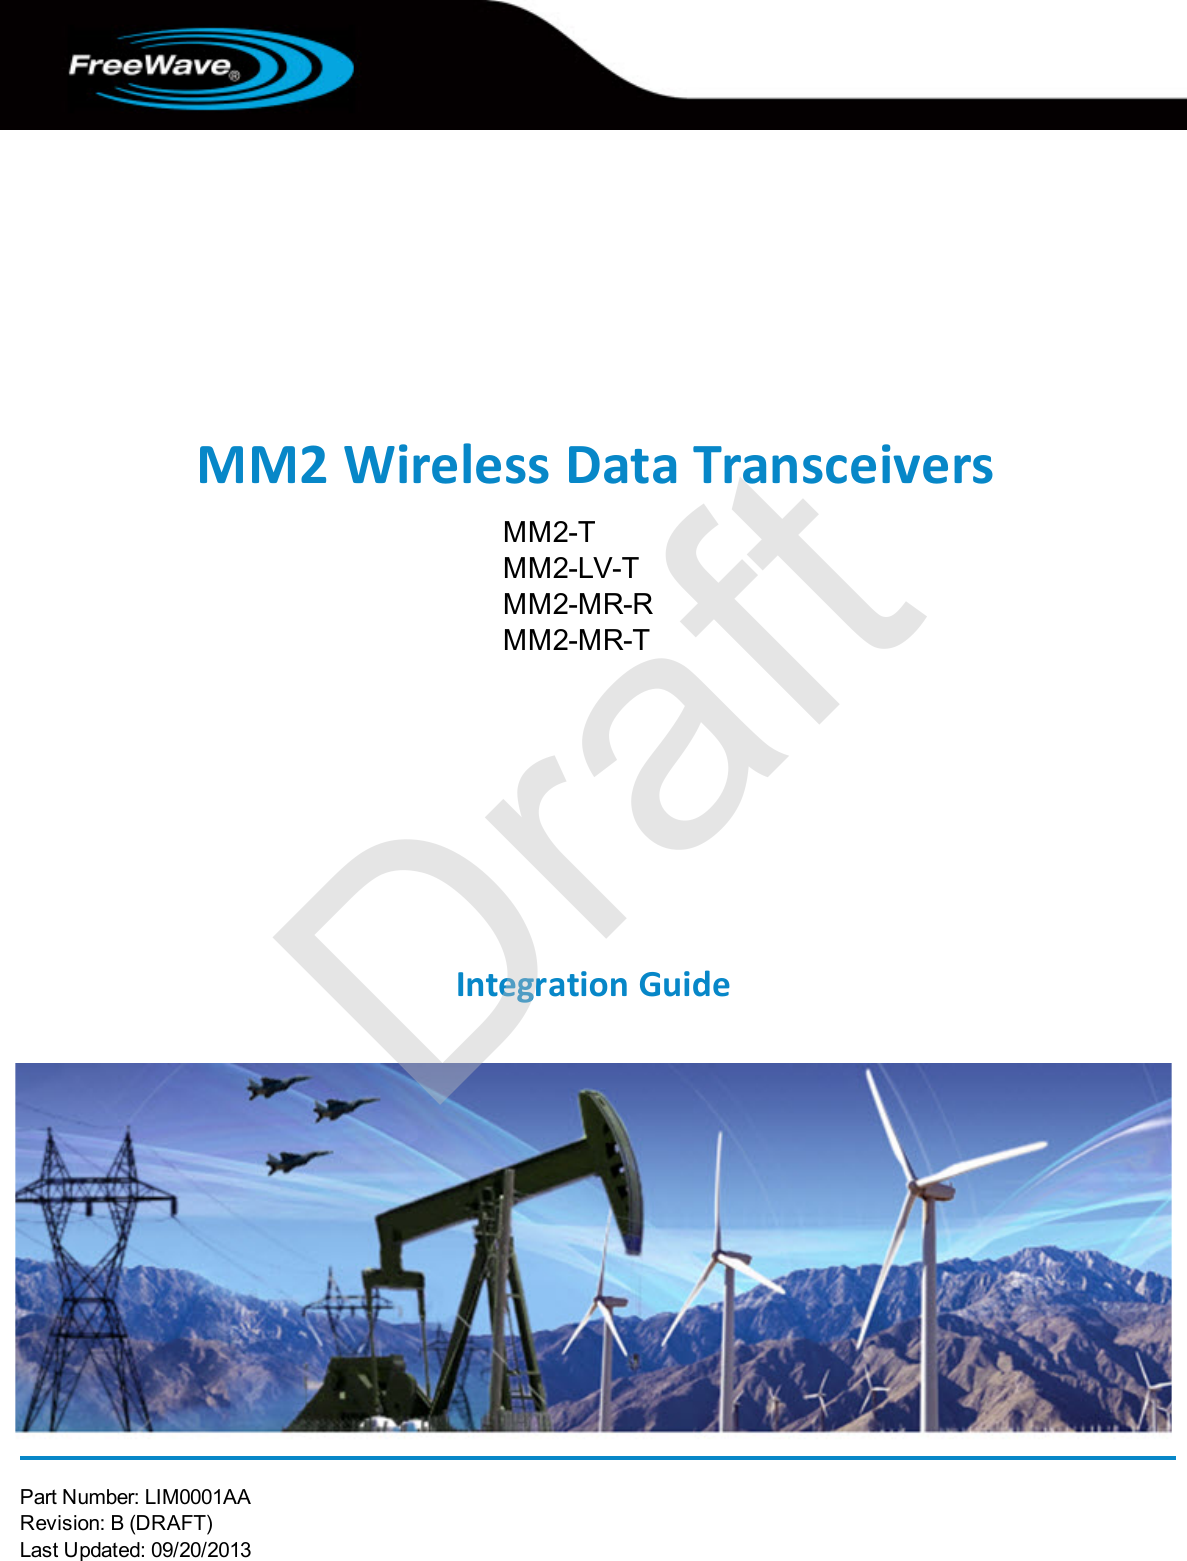 Part Number: LIM0001AARevision: B (DRAFT)Last Updated: 09/20/2013MM2 Wireless Data TransceiversMM2-TMM2-LV-TMM2-MR-RMM2-MR-TIntegration GuideDraft